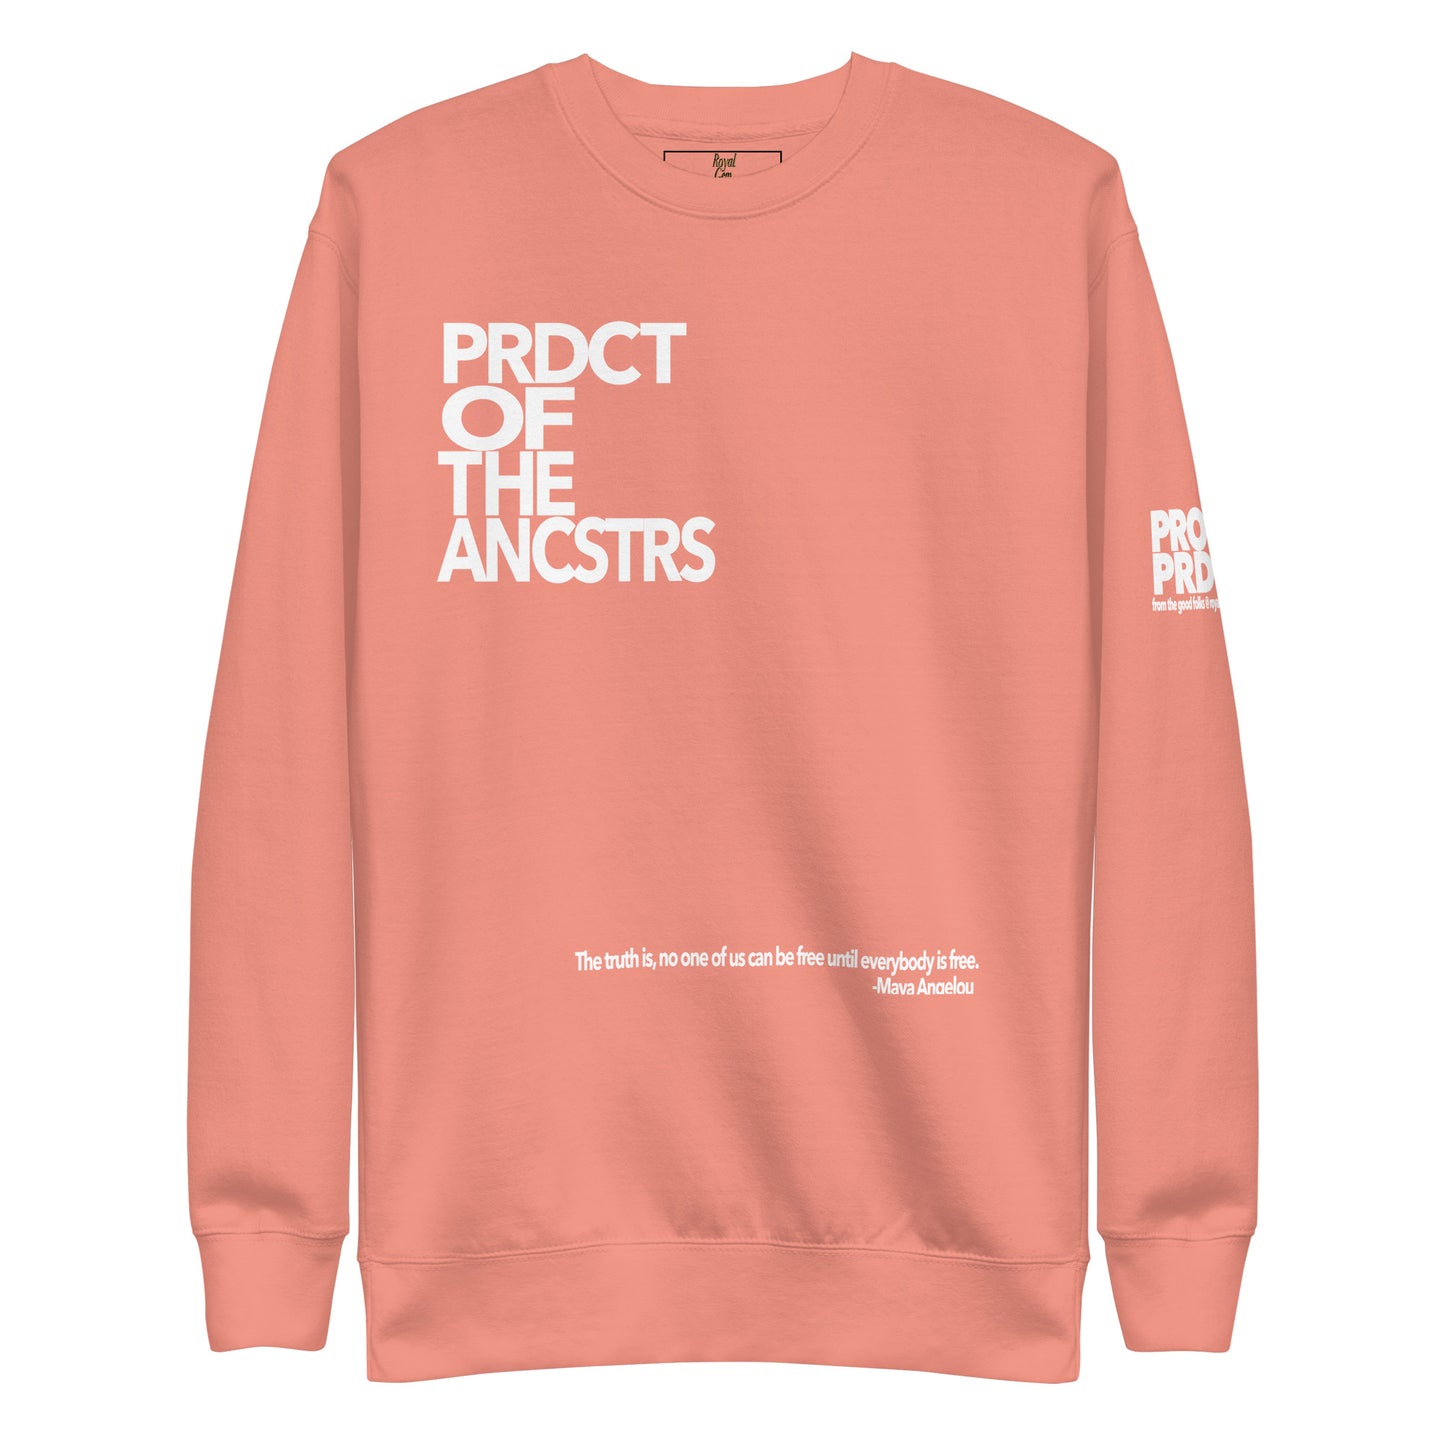 "Product of the Ancestors" Sweatshirt